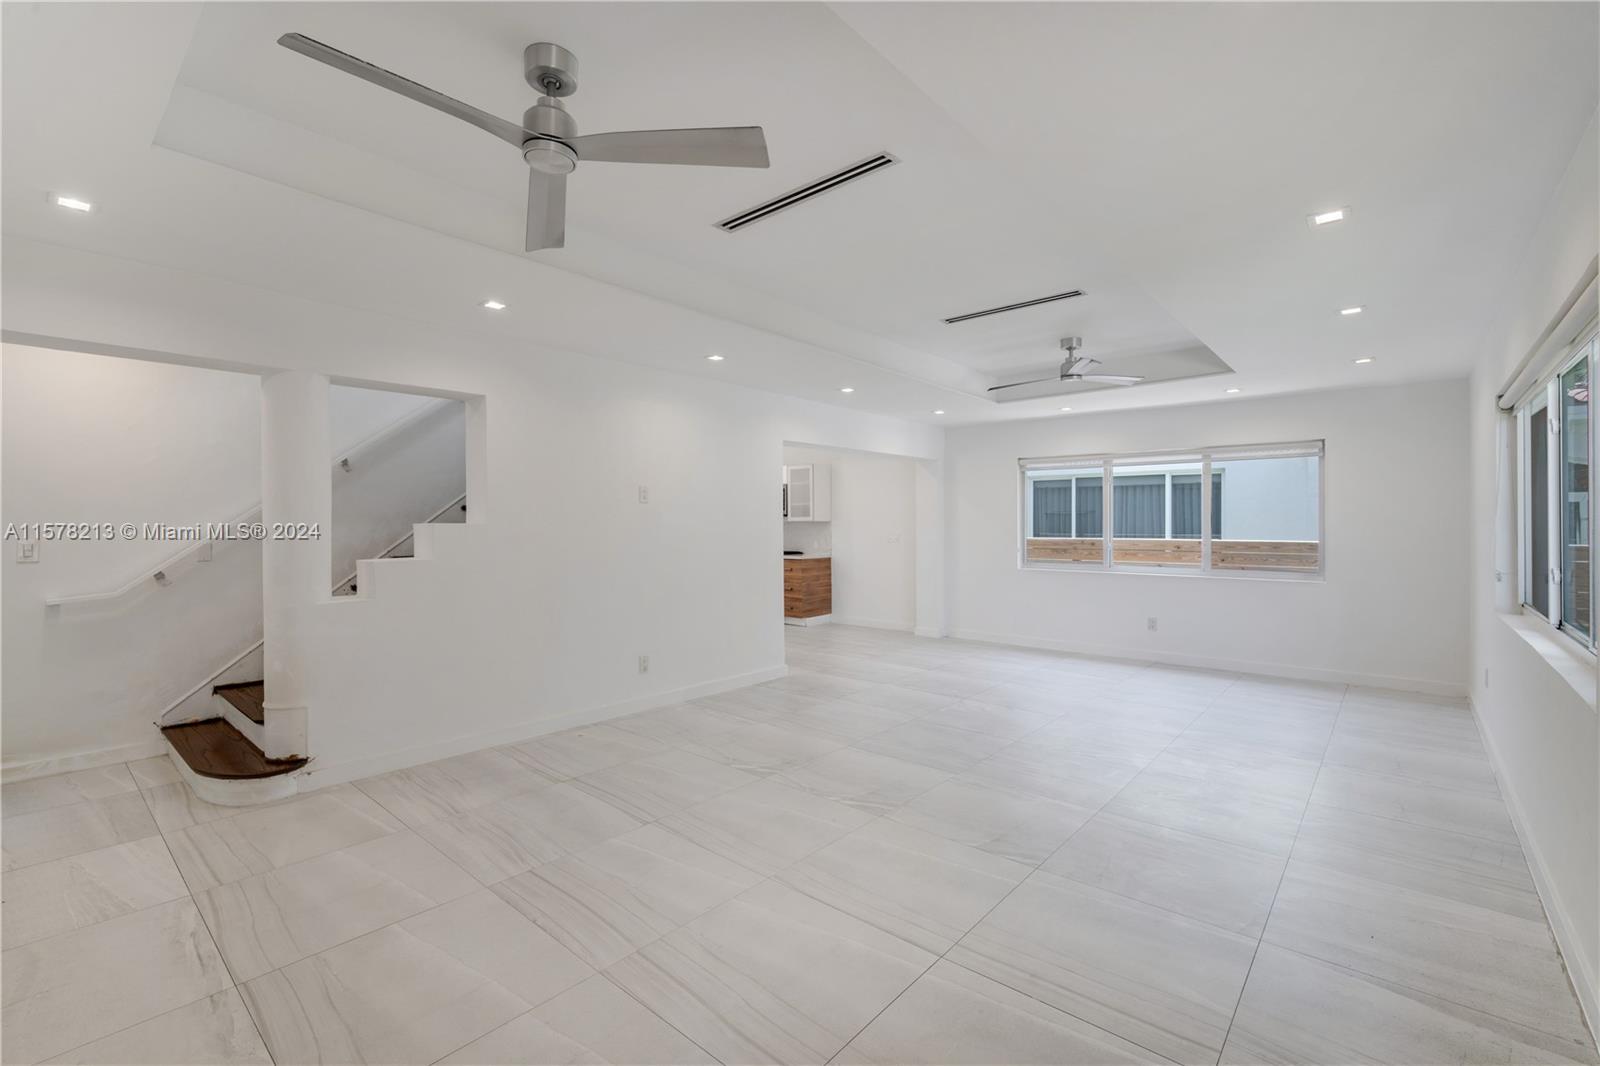 Rental Property at 550 W 49th St St, Miami Beach, Miami-Dade County, Florida - Bedrooms: 3 
Bathrooms: 2  - $8,900 MO.